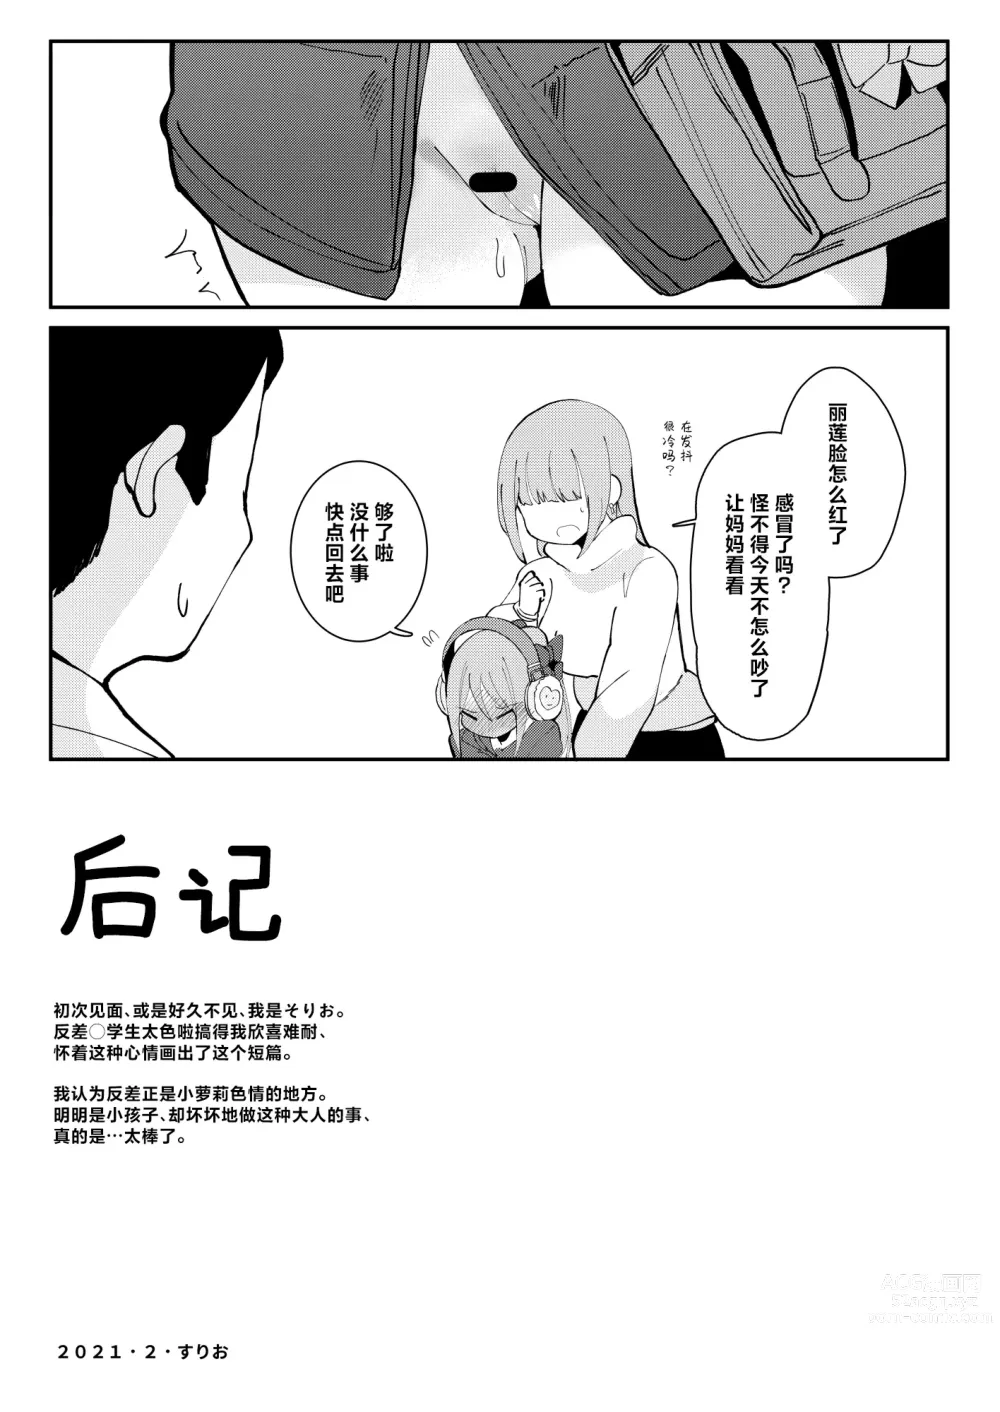 Page 13 of doujinshi 今天瞒着妈妈和家庭教师做了H的事❤